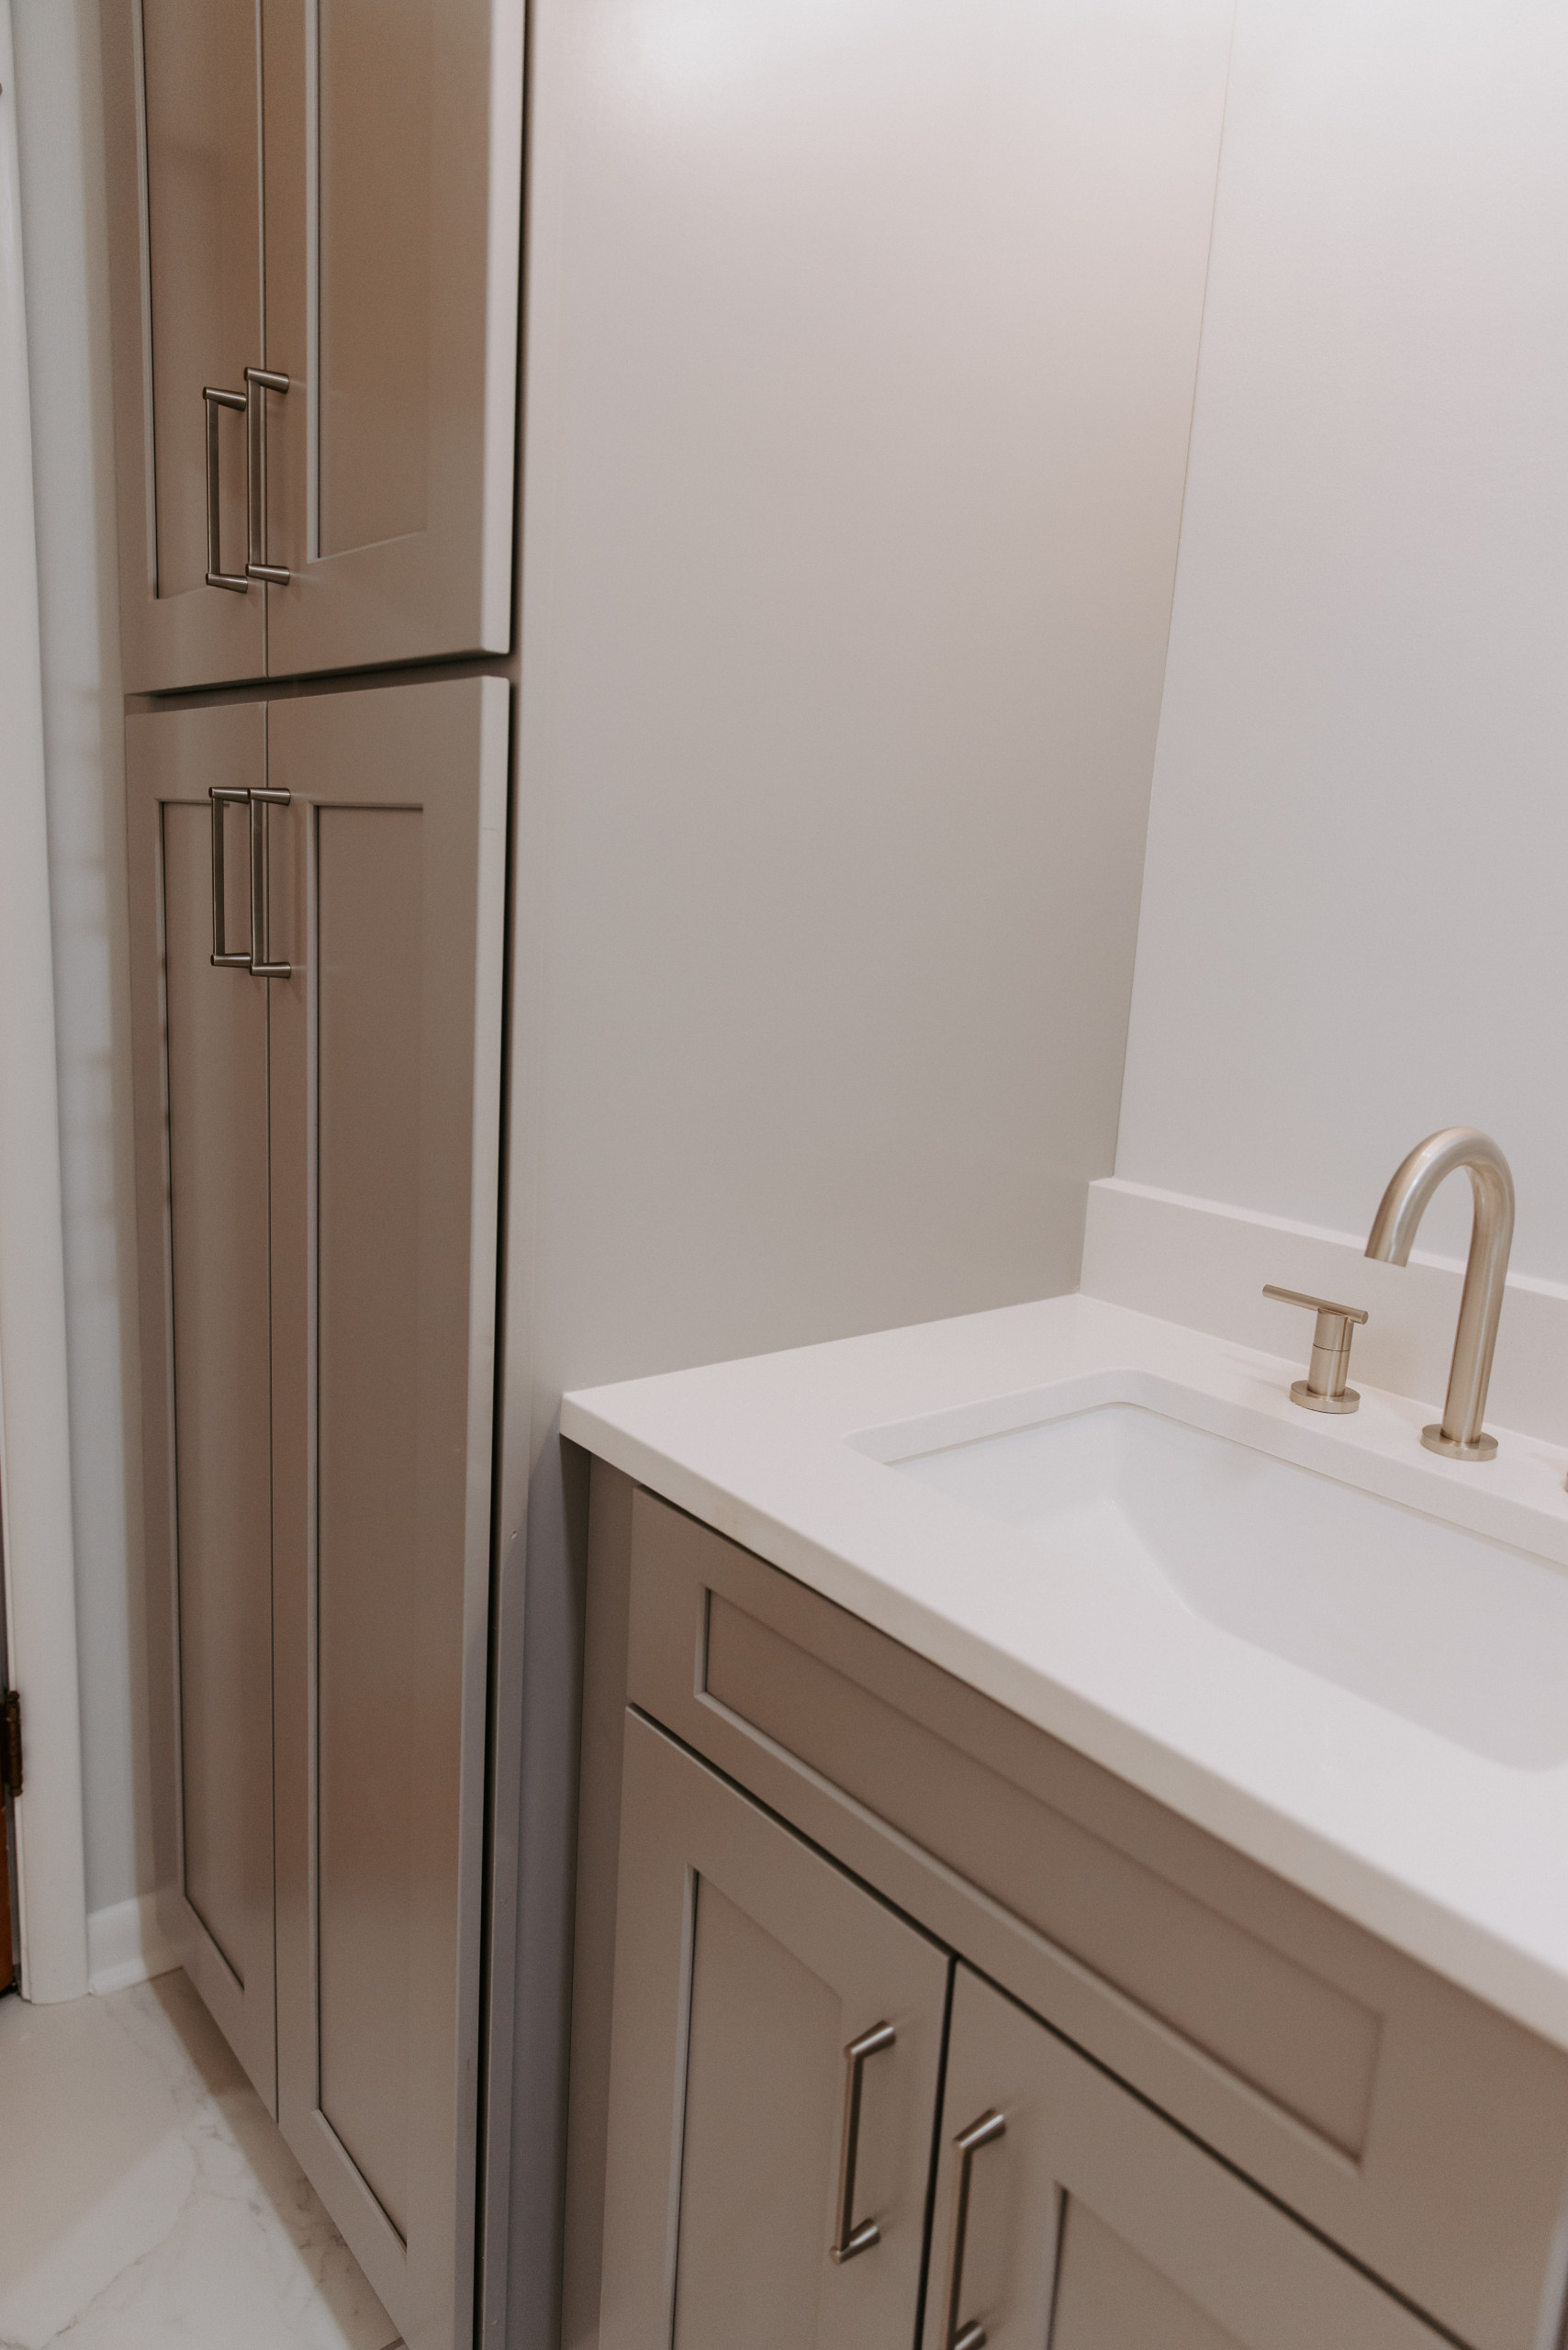 Kitchen + Bathroom remodel